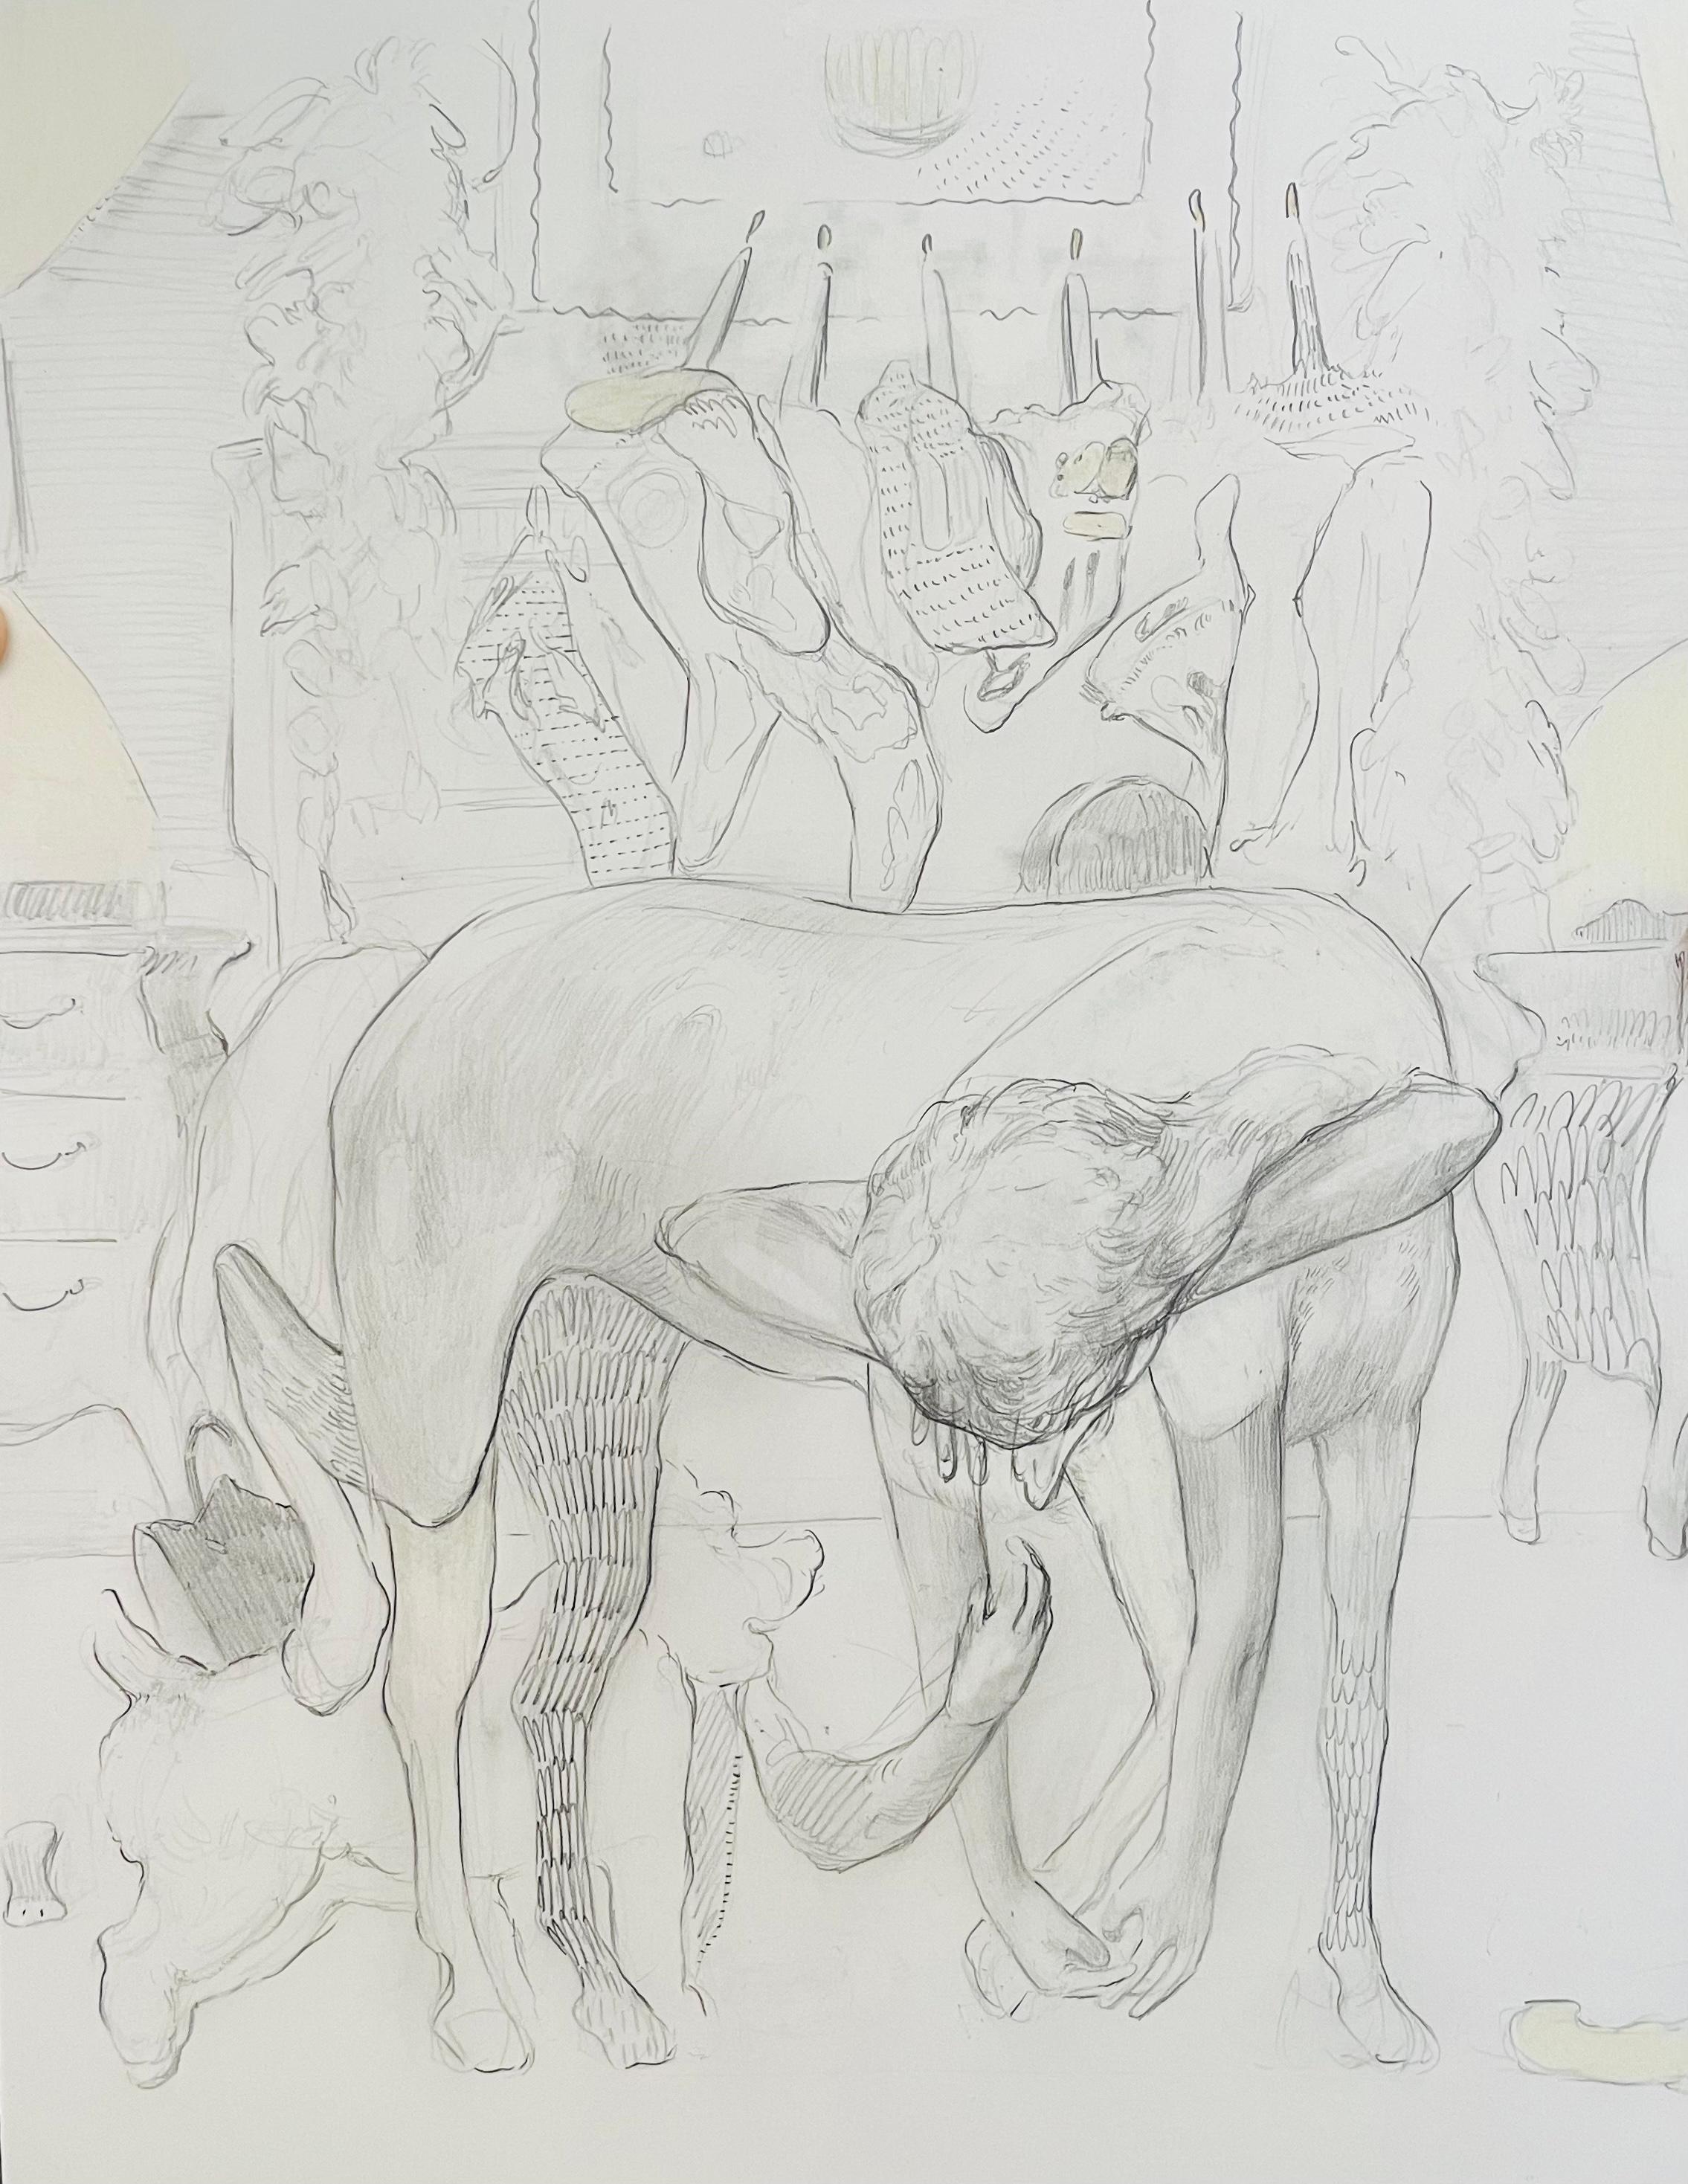 Gonzalo García Figurative Art - "Sueño con un centauro amarillo", centuar, surrealist drawing, figurative